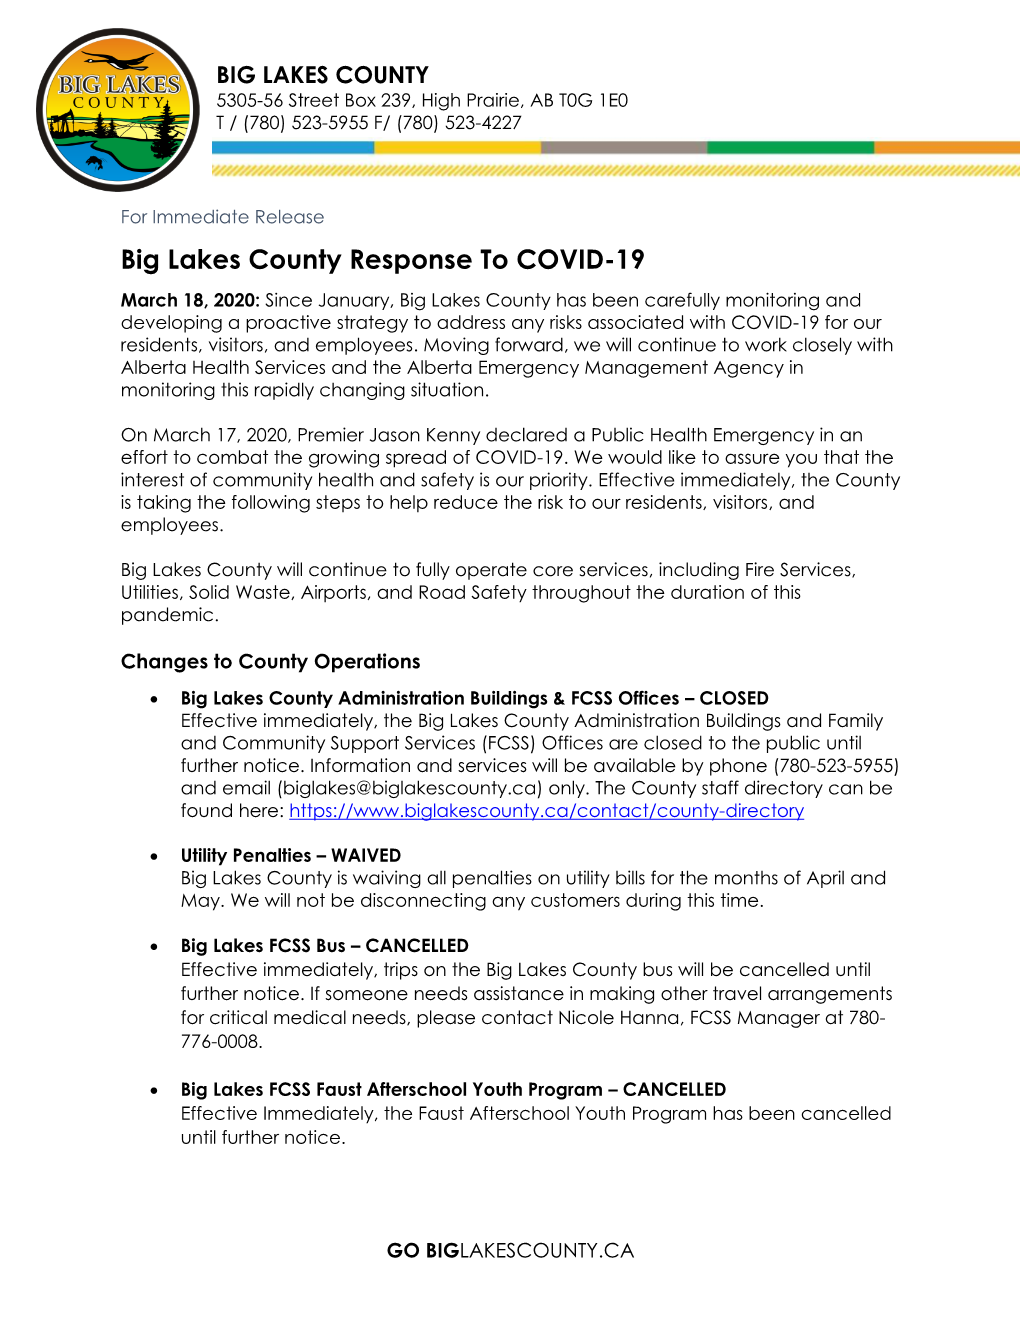 Big Lakes County Response to COVID-19